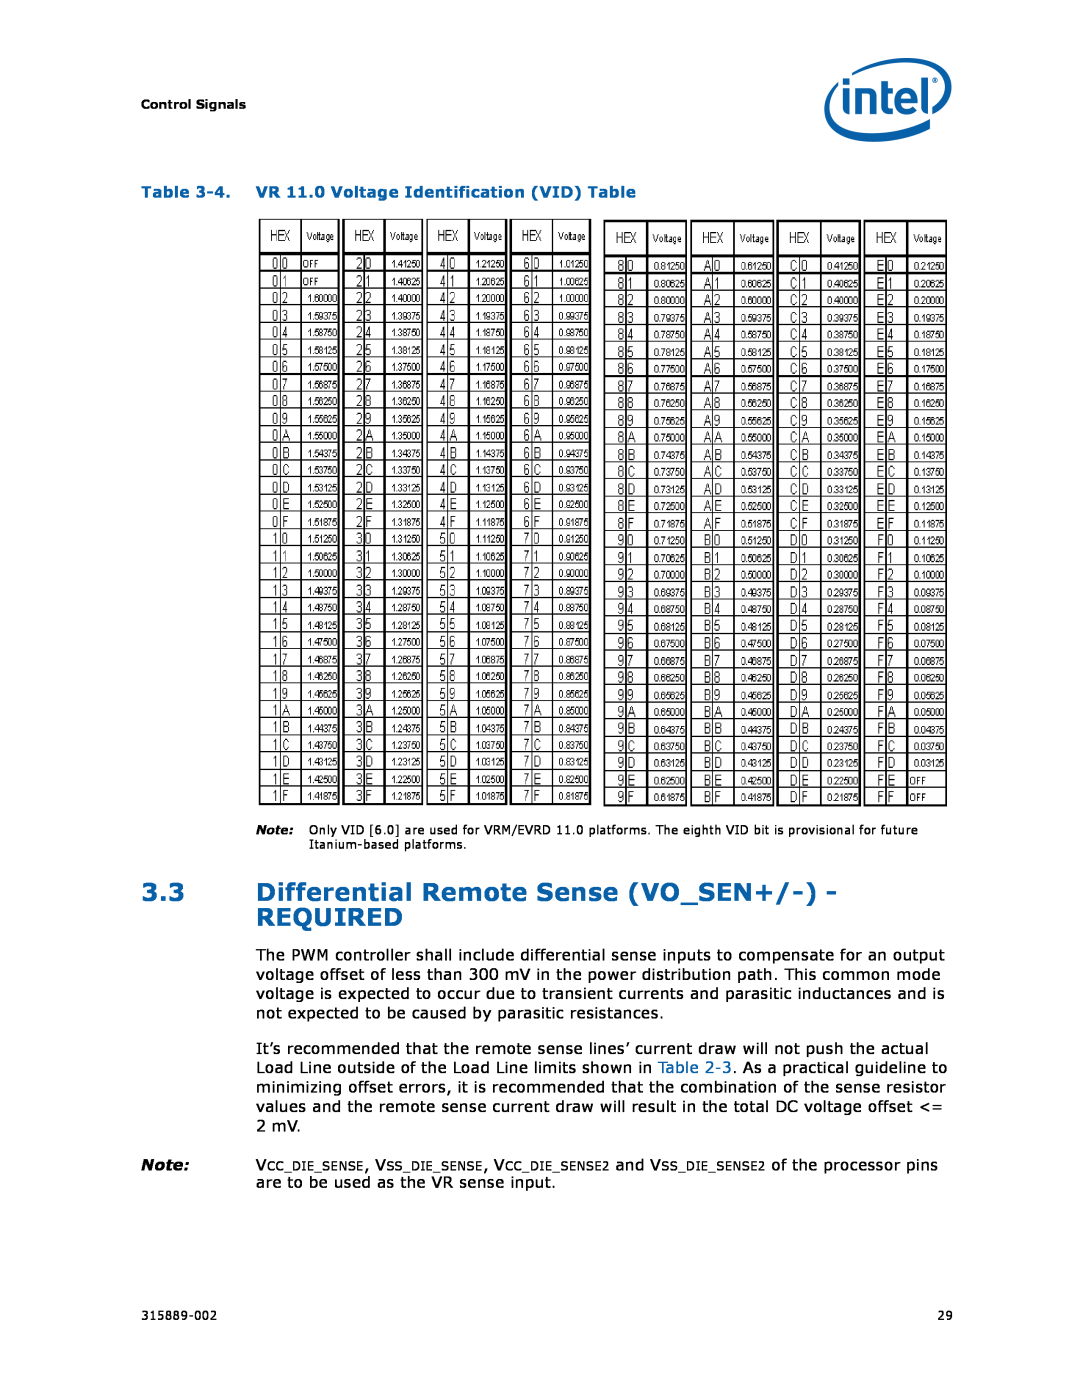 Intel 315889-002 manual 3.3Differential Remote Sense VO SEN+ REQUIRED 